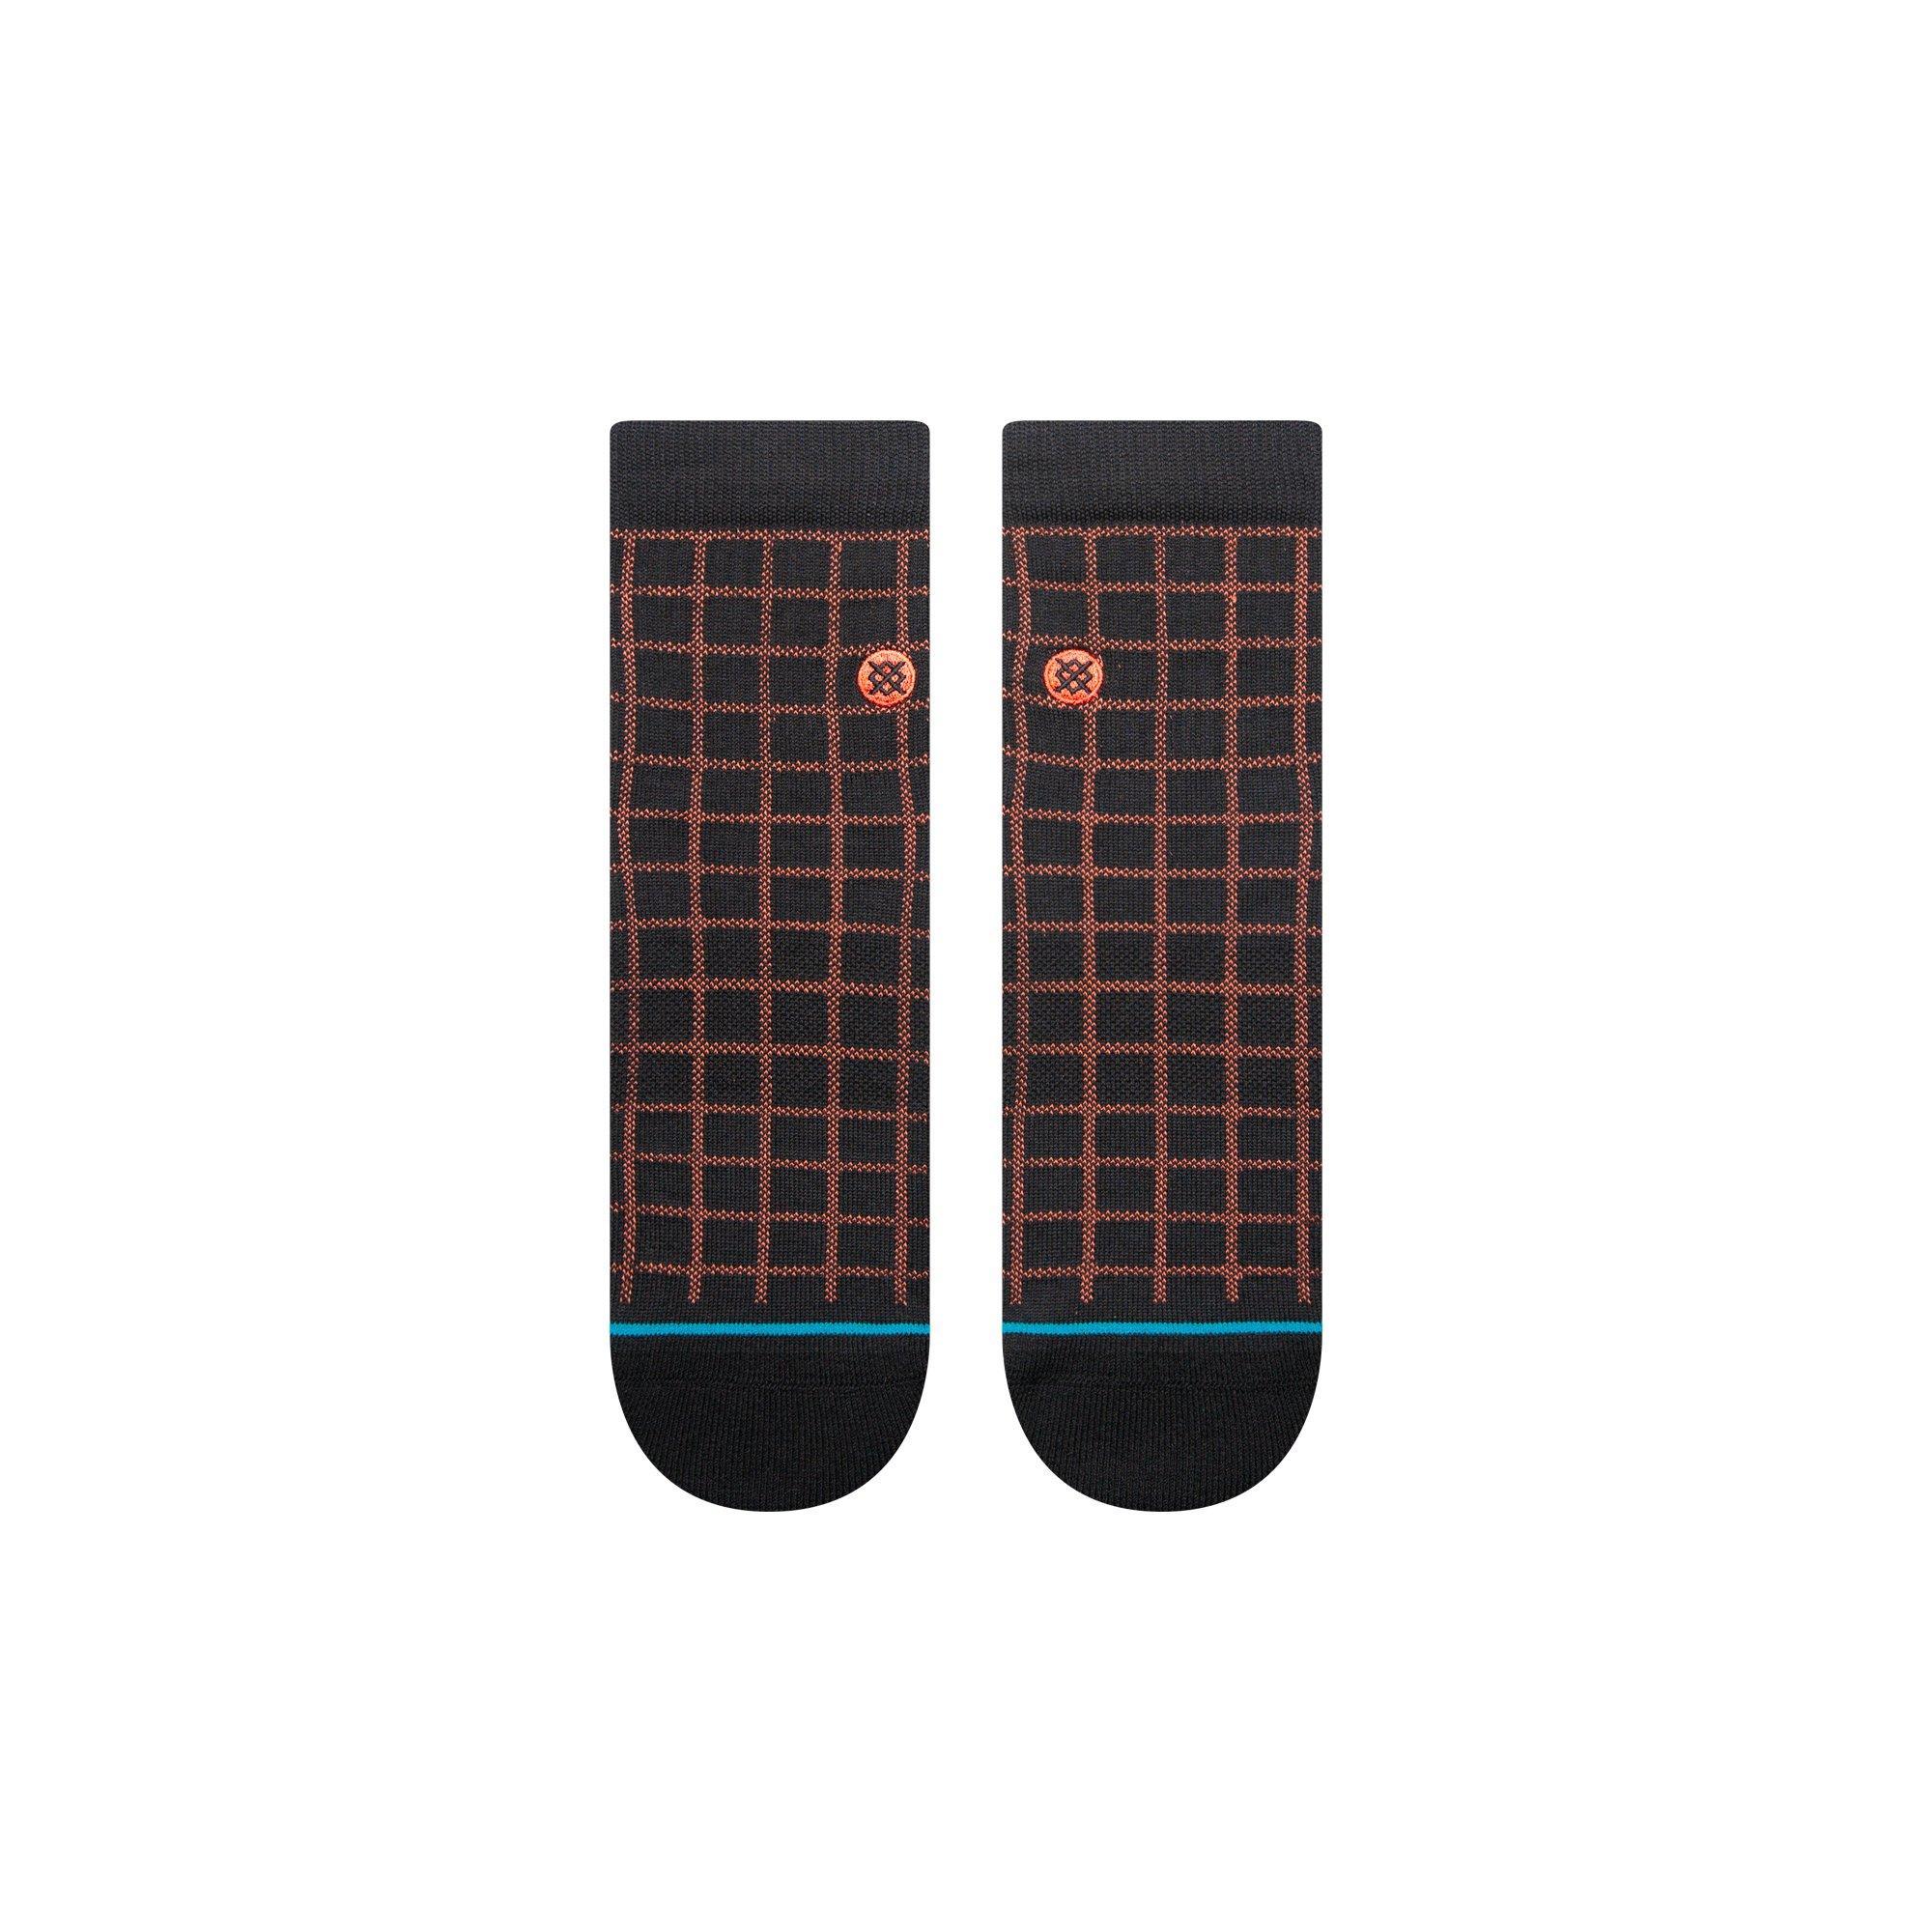 Stance Icon Quarter Crew Socks Product Image